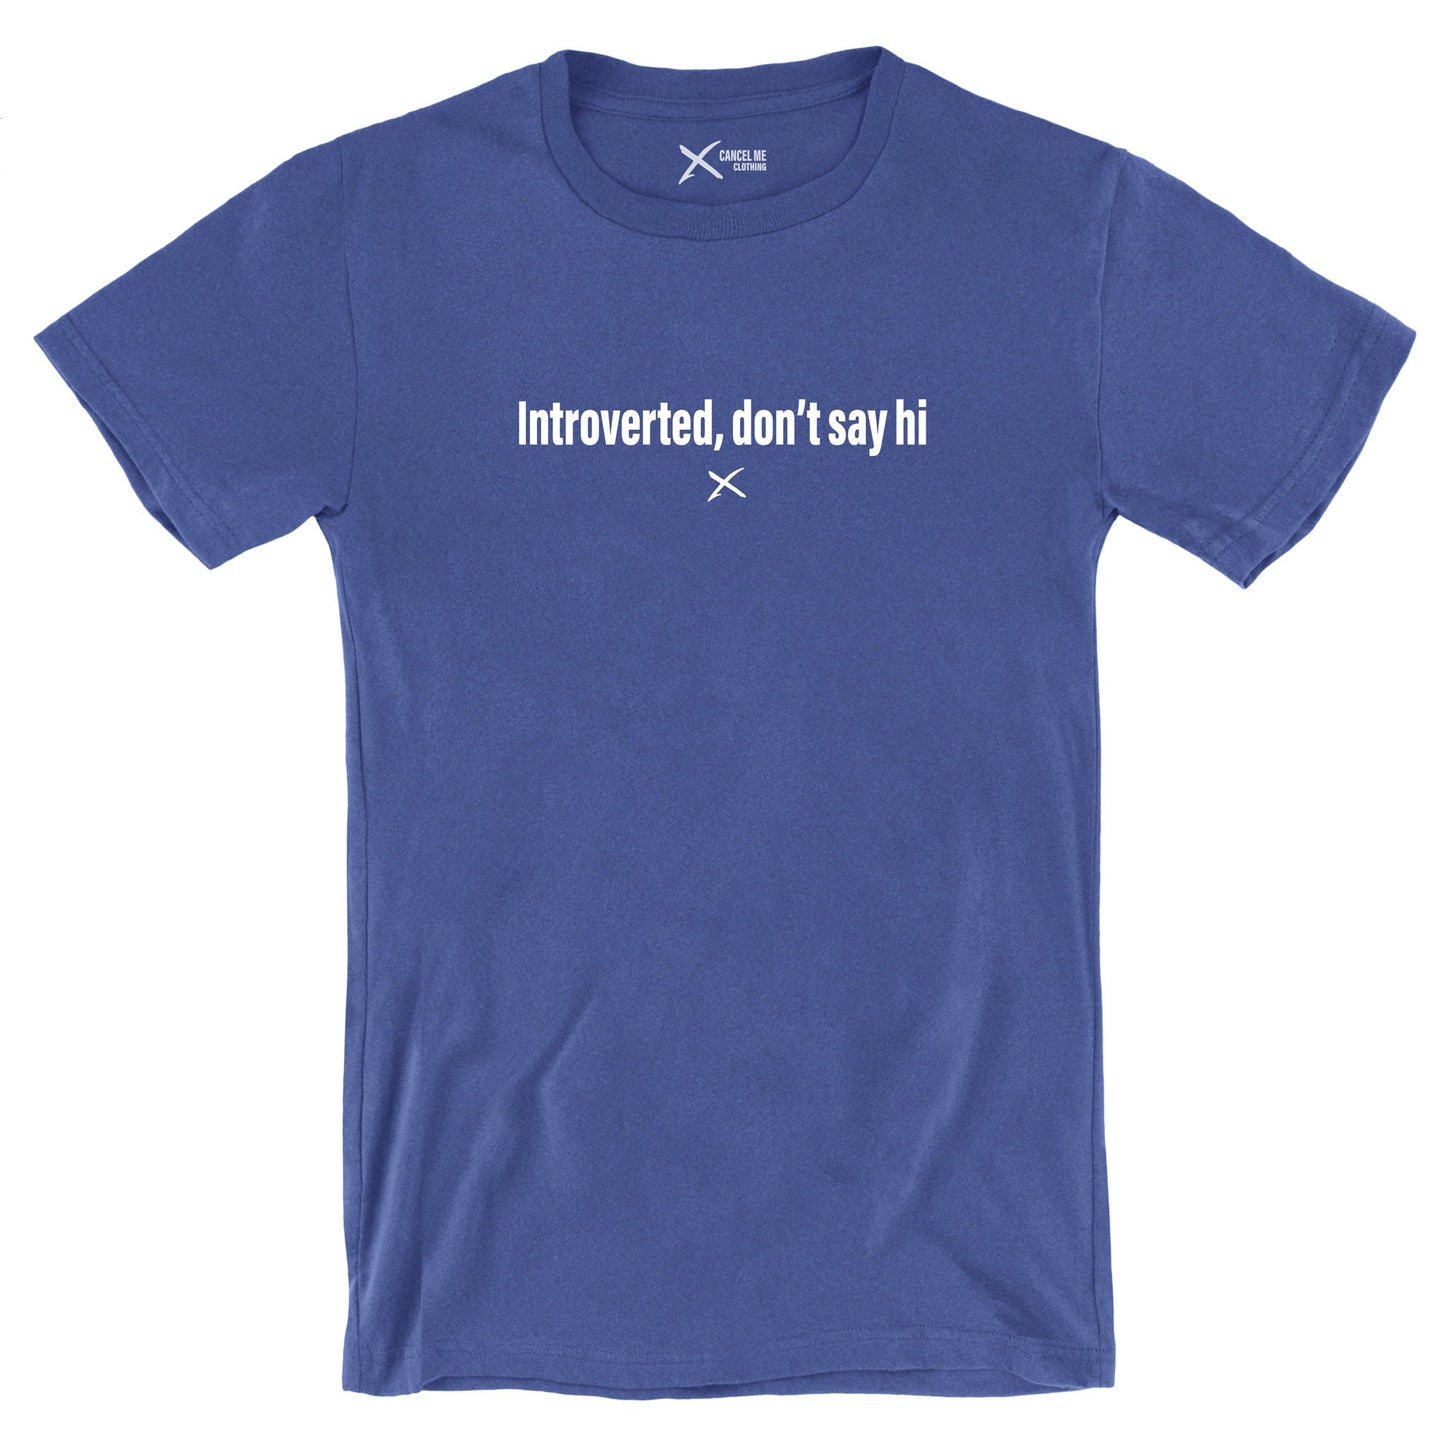 Introverted, don't say hi - Shirt